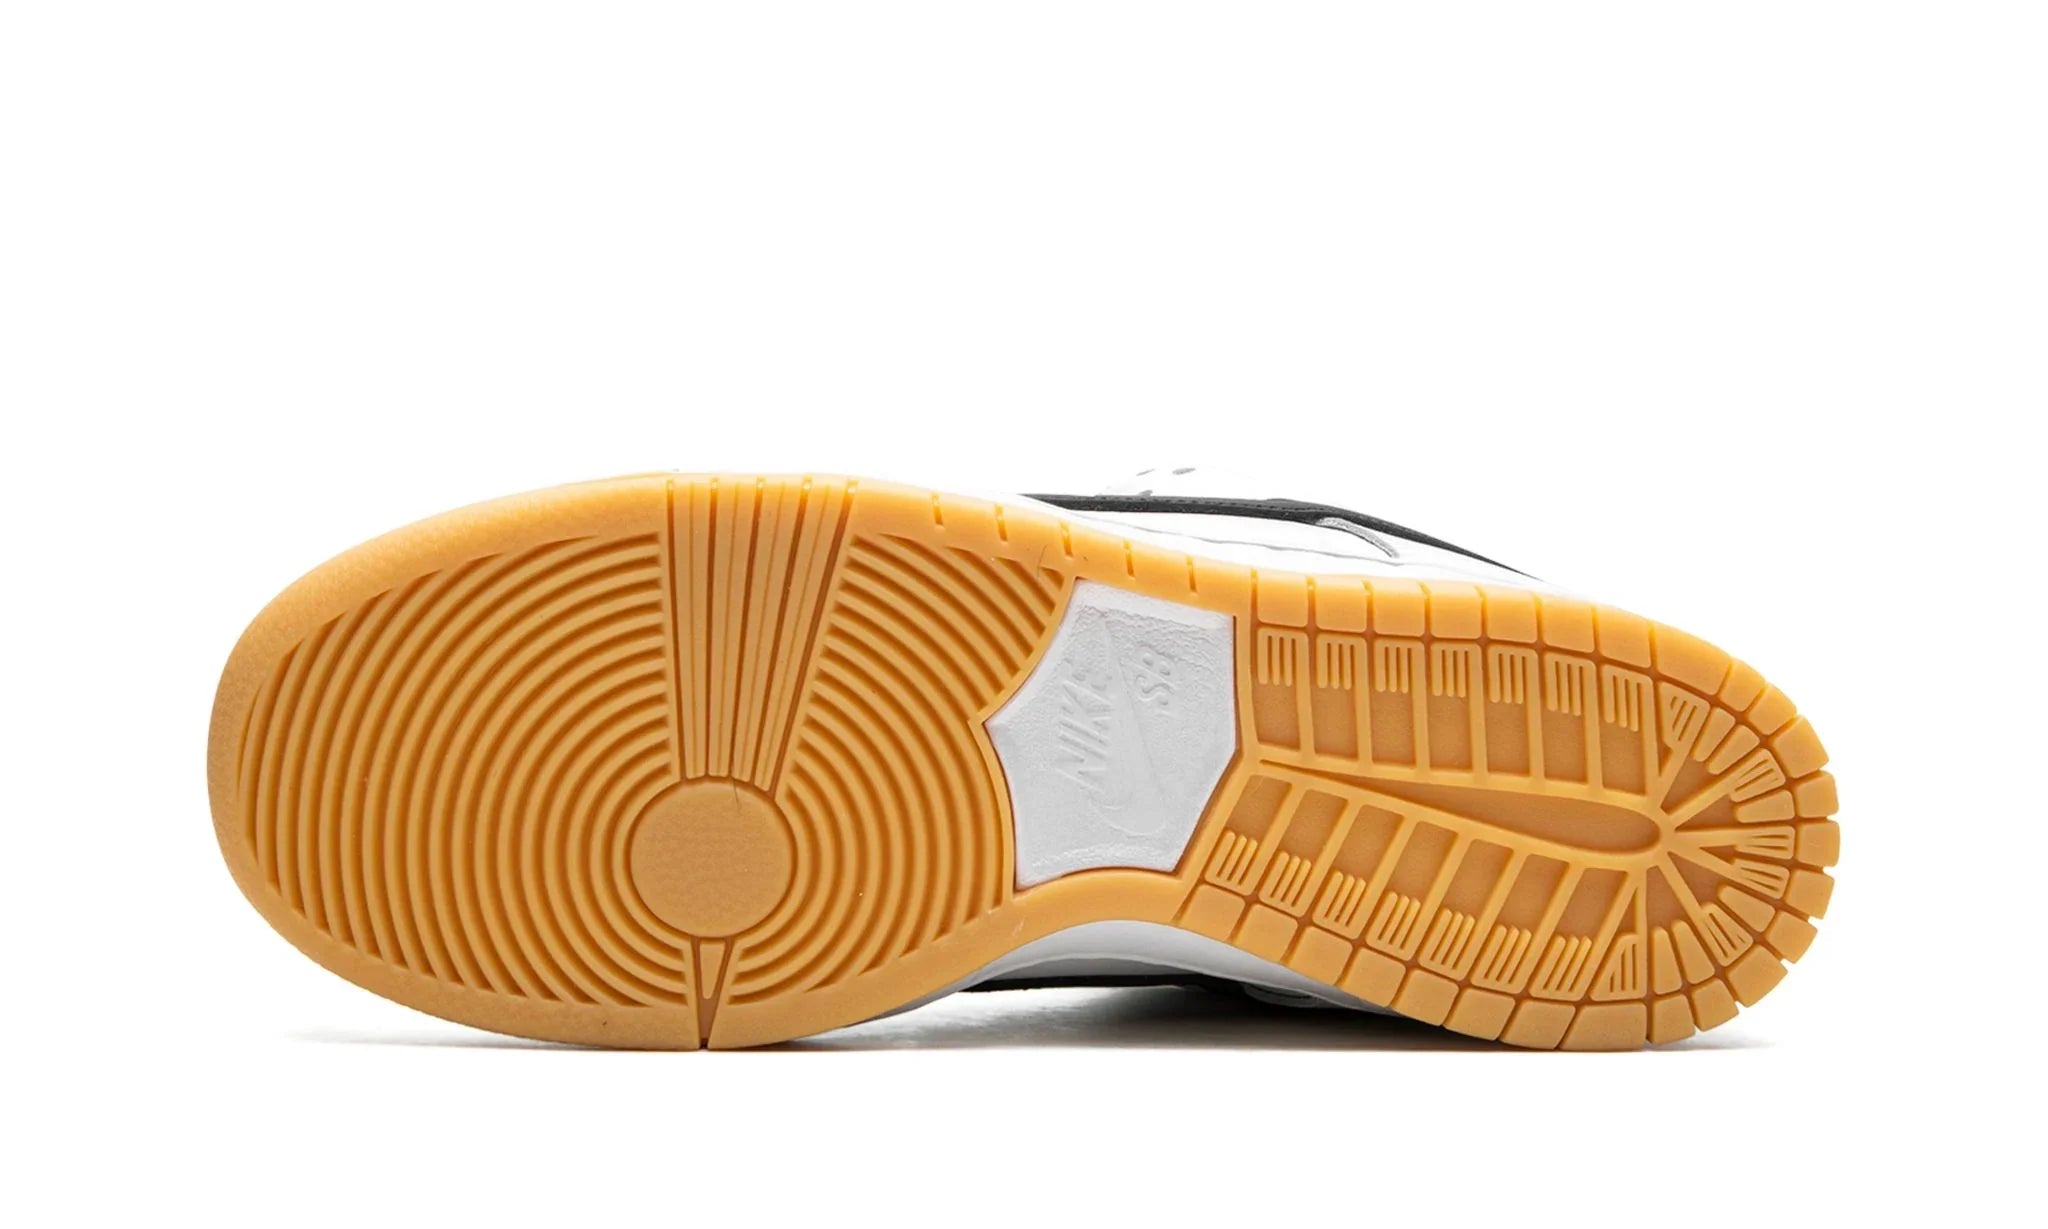 Nike SB Dunk Low "White Gum" - CD2563-101 - Sneakers